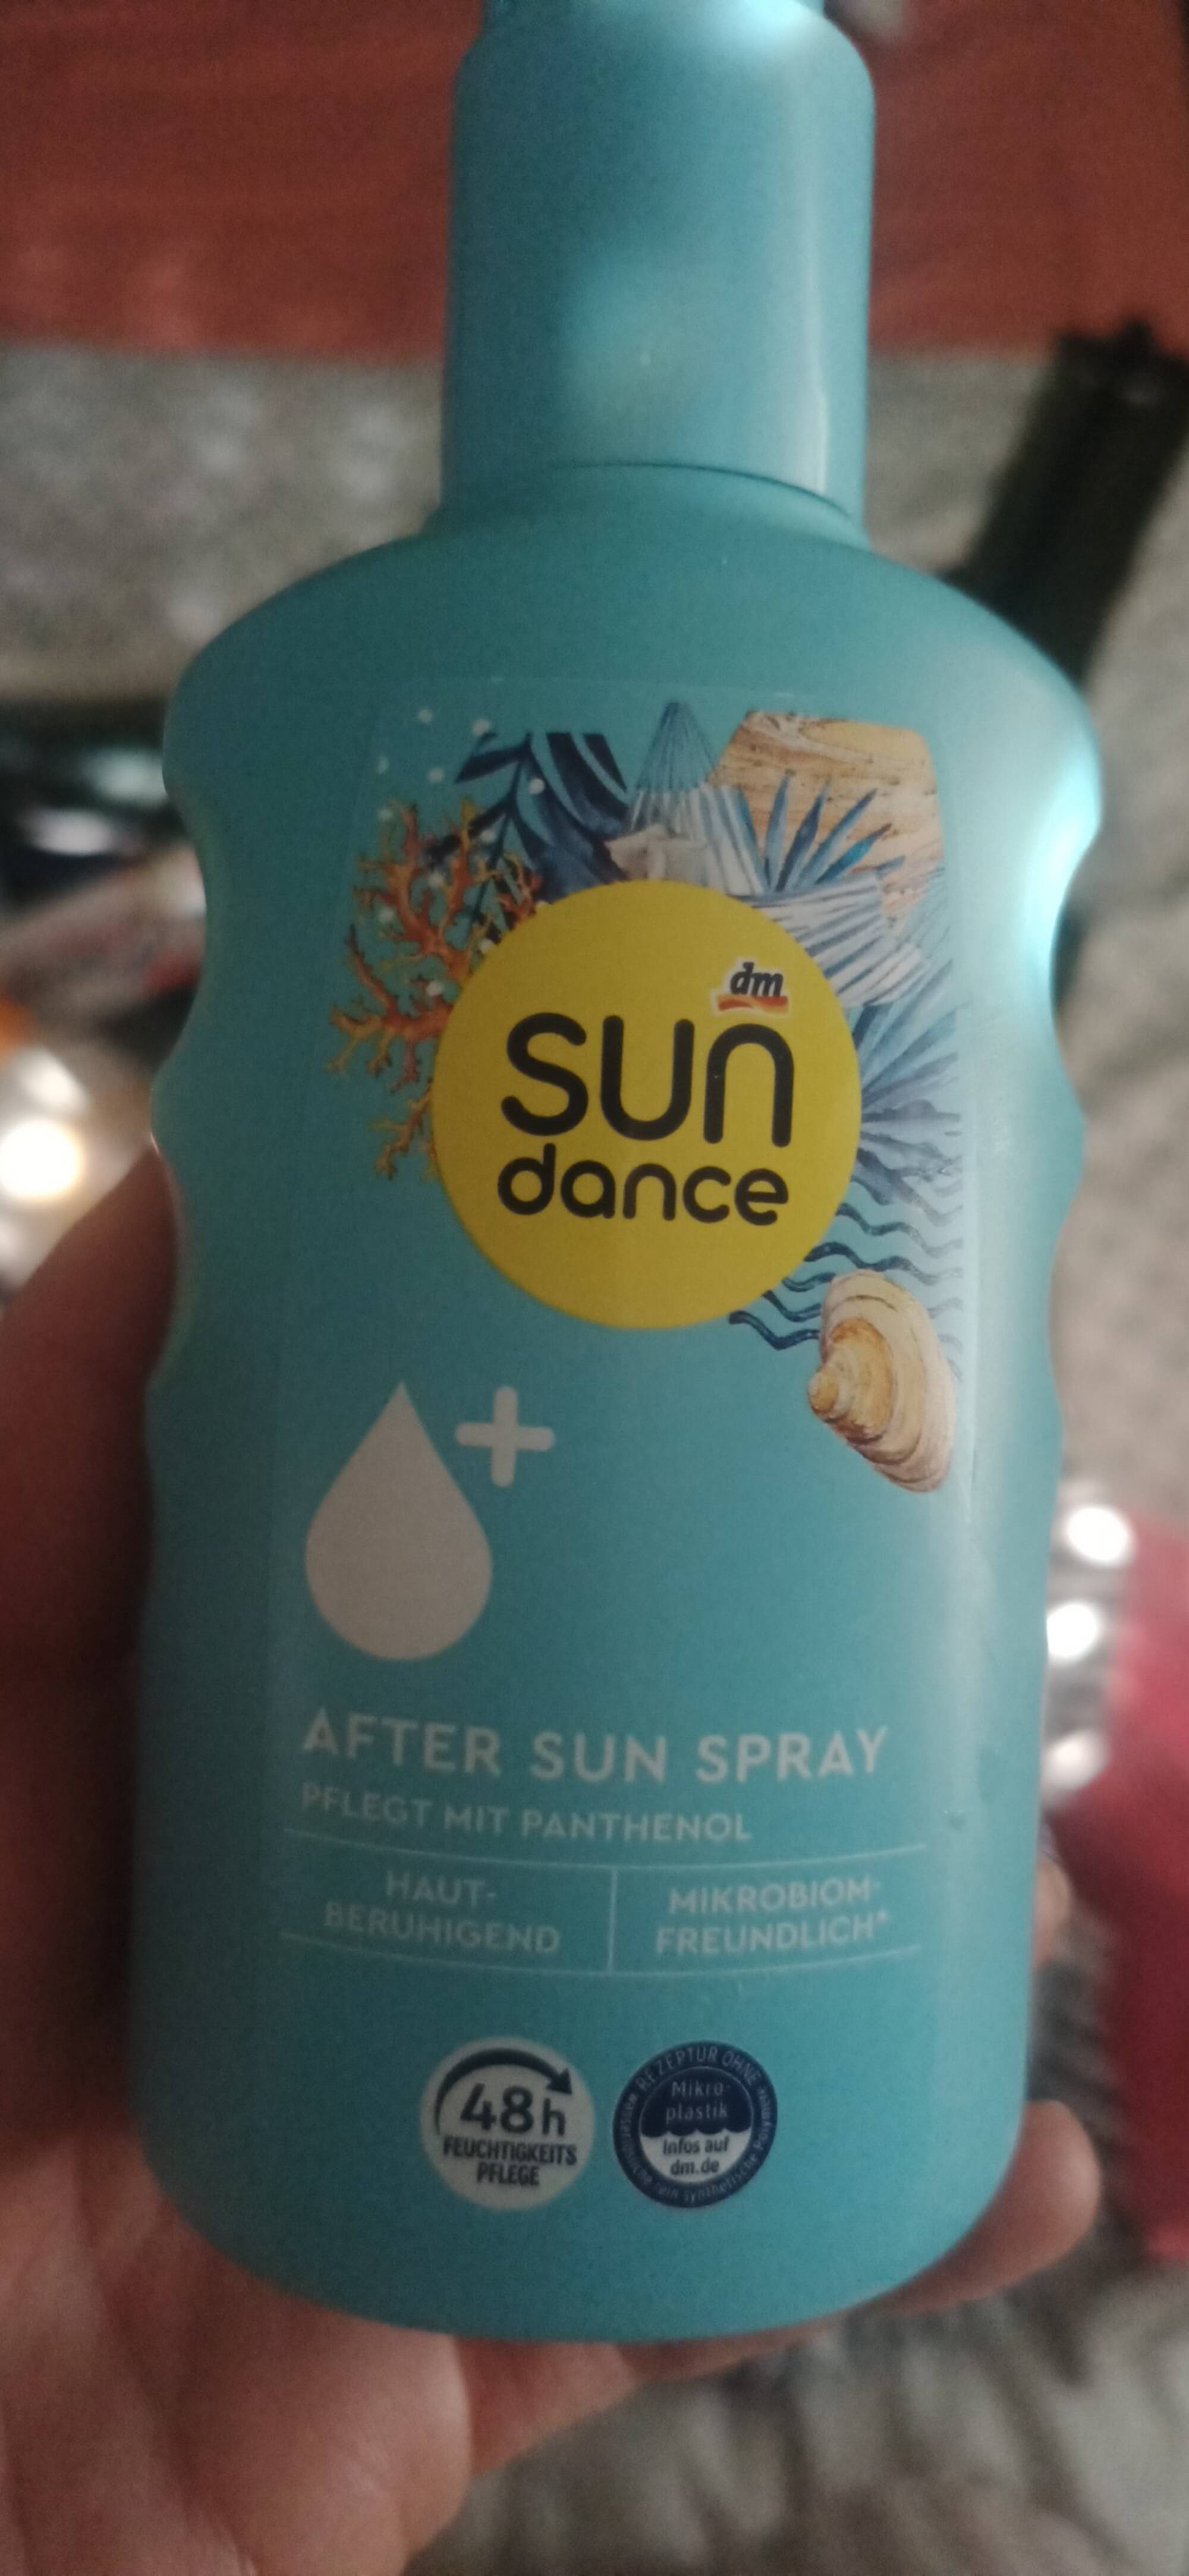 SUNDANCE - After sun spray